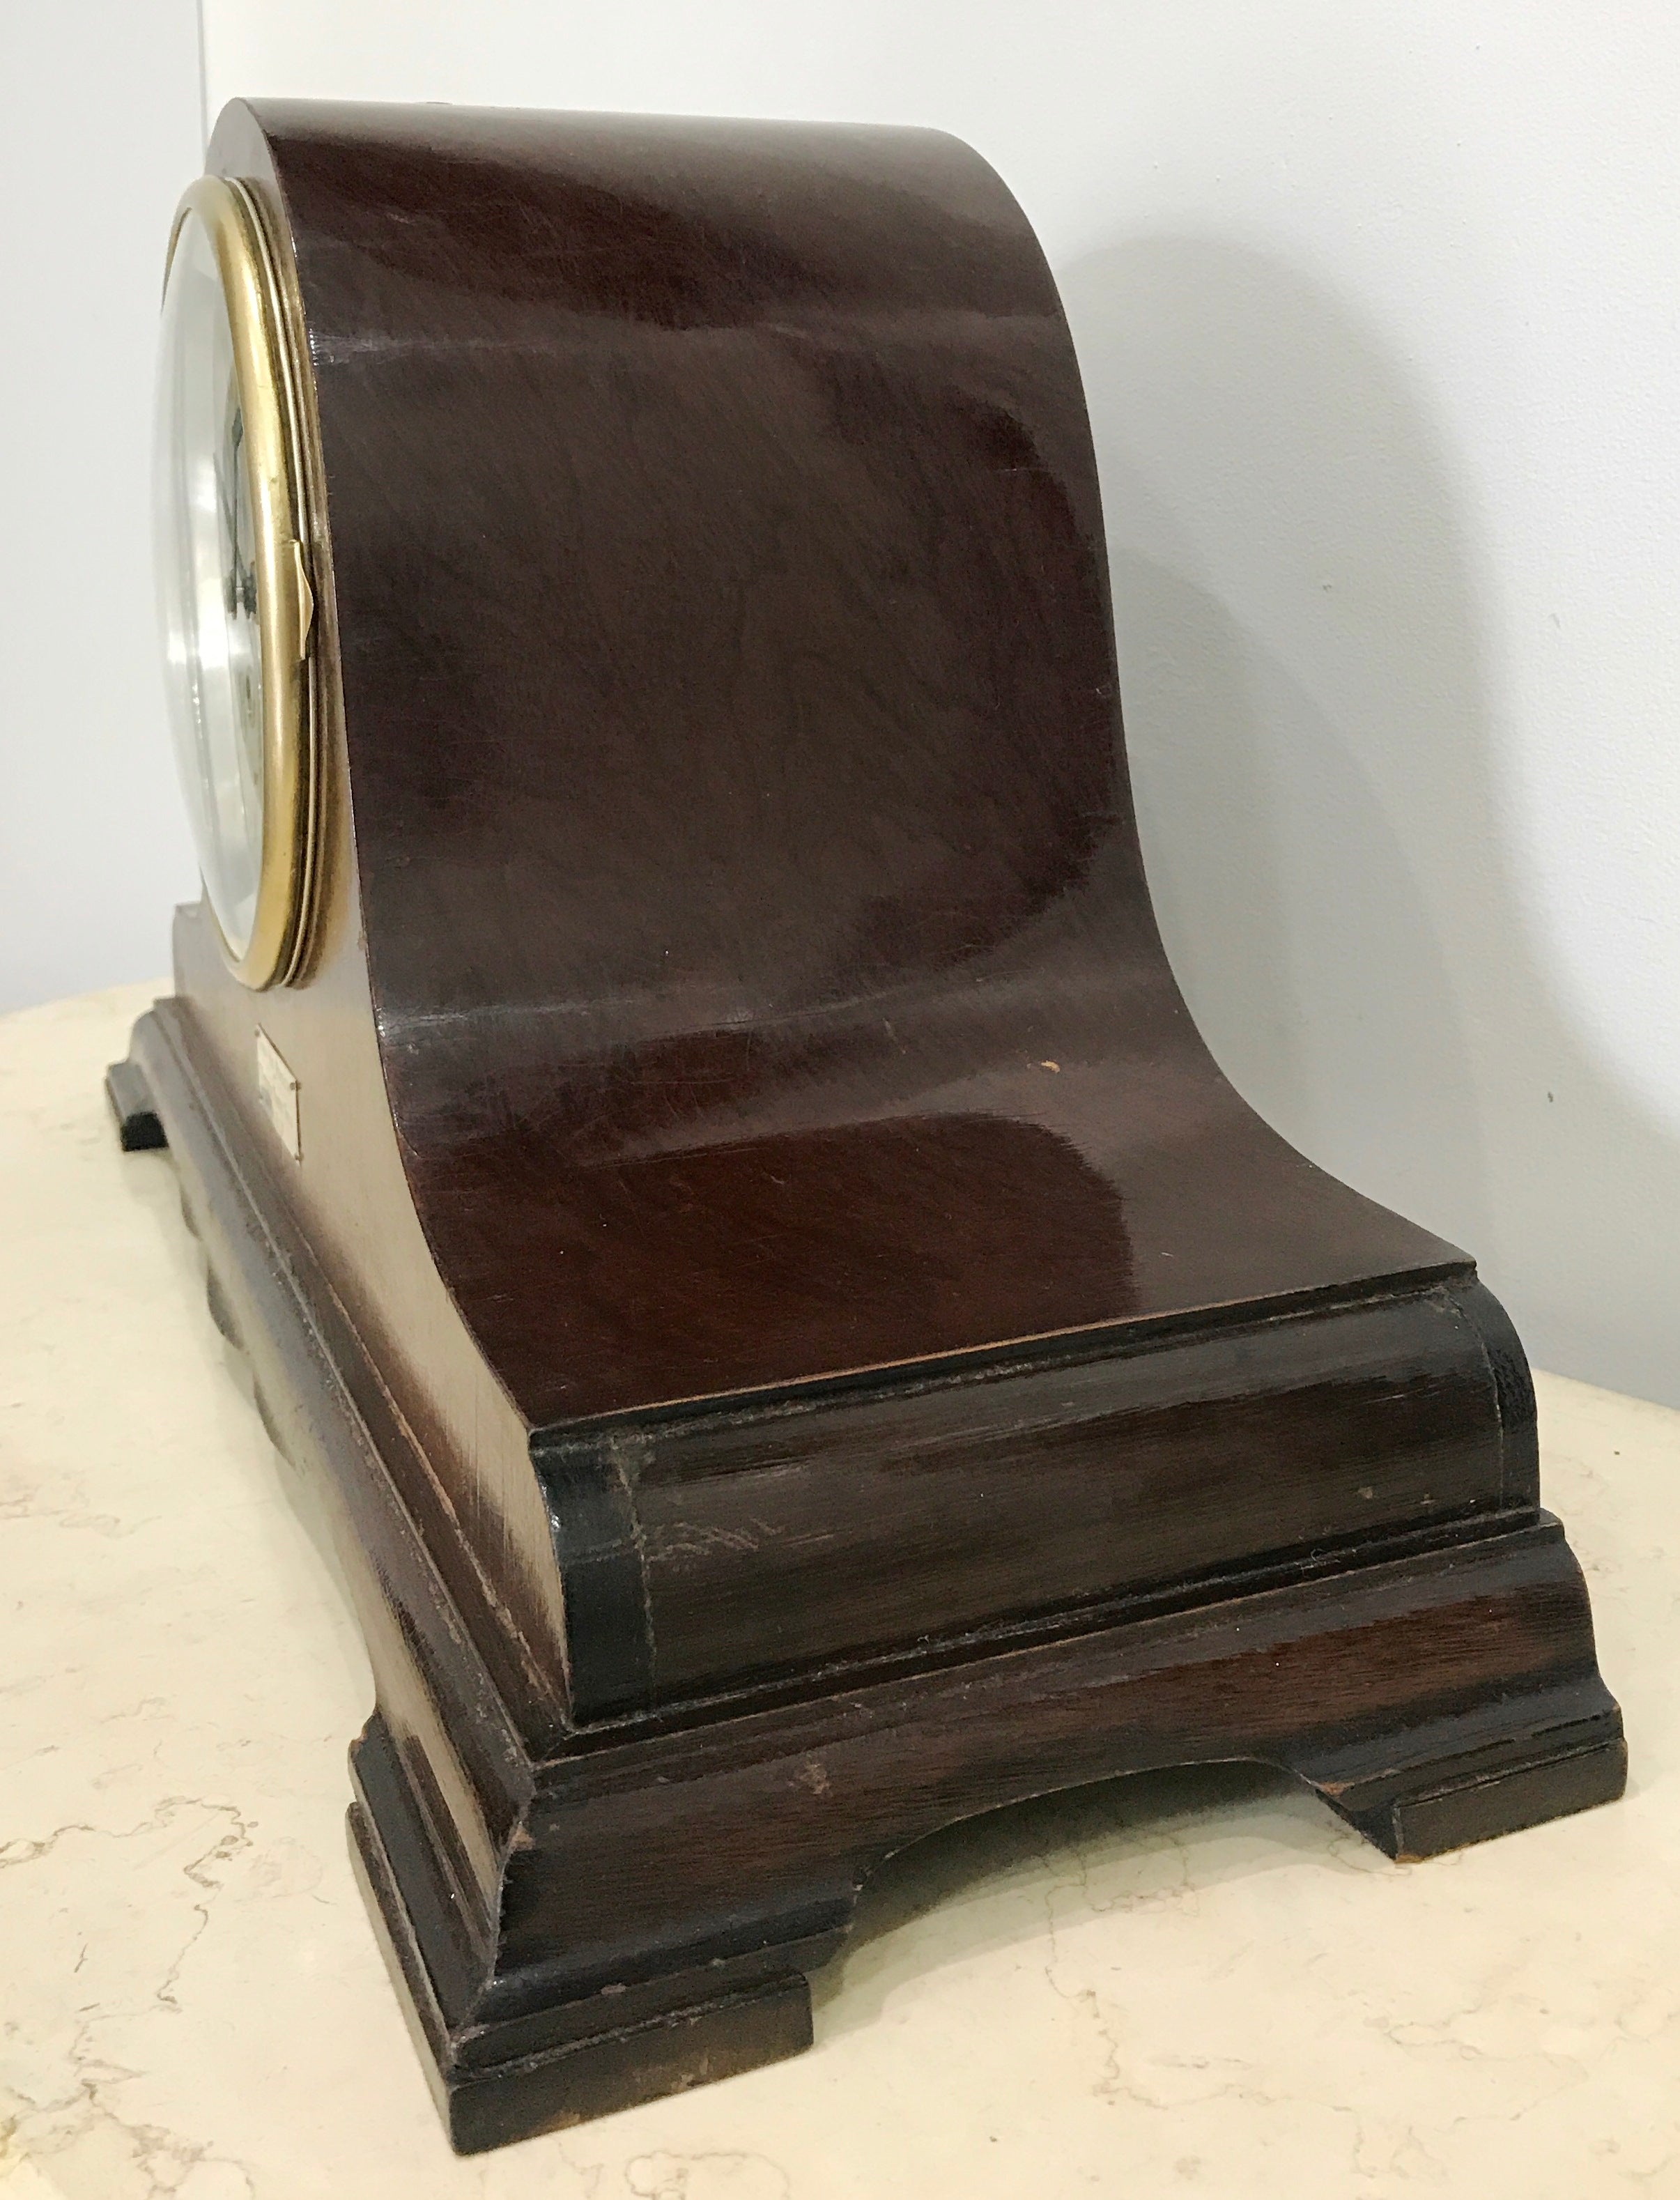 Original Vintage Battery Mantel Clock | eXibit collection